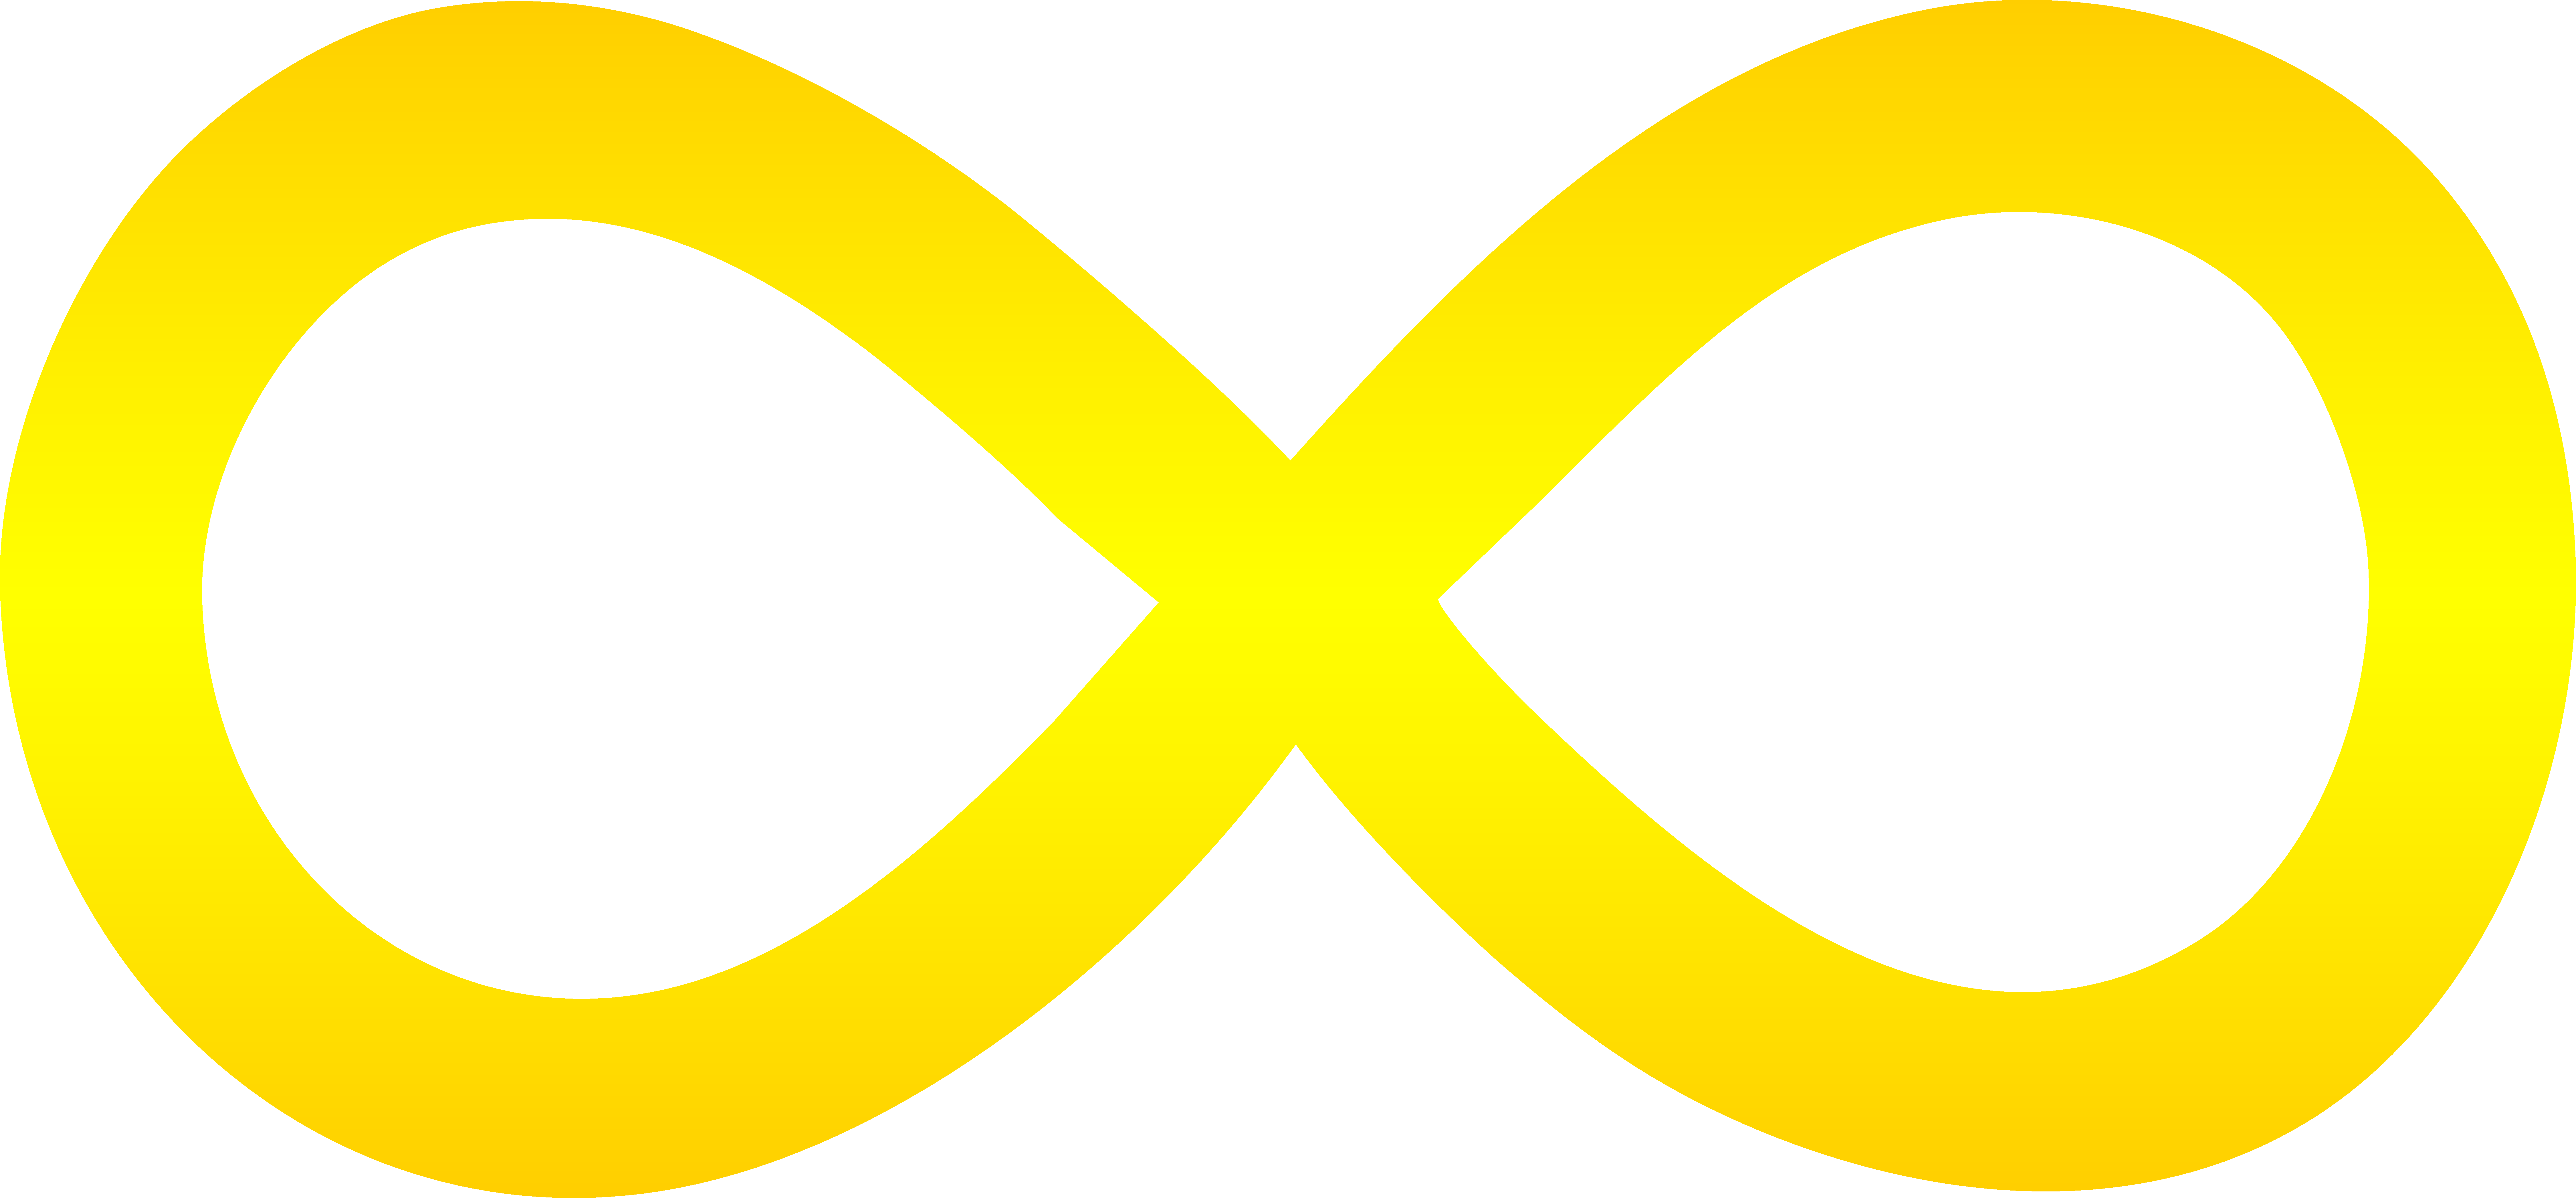 Infinity symbol PNG